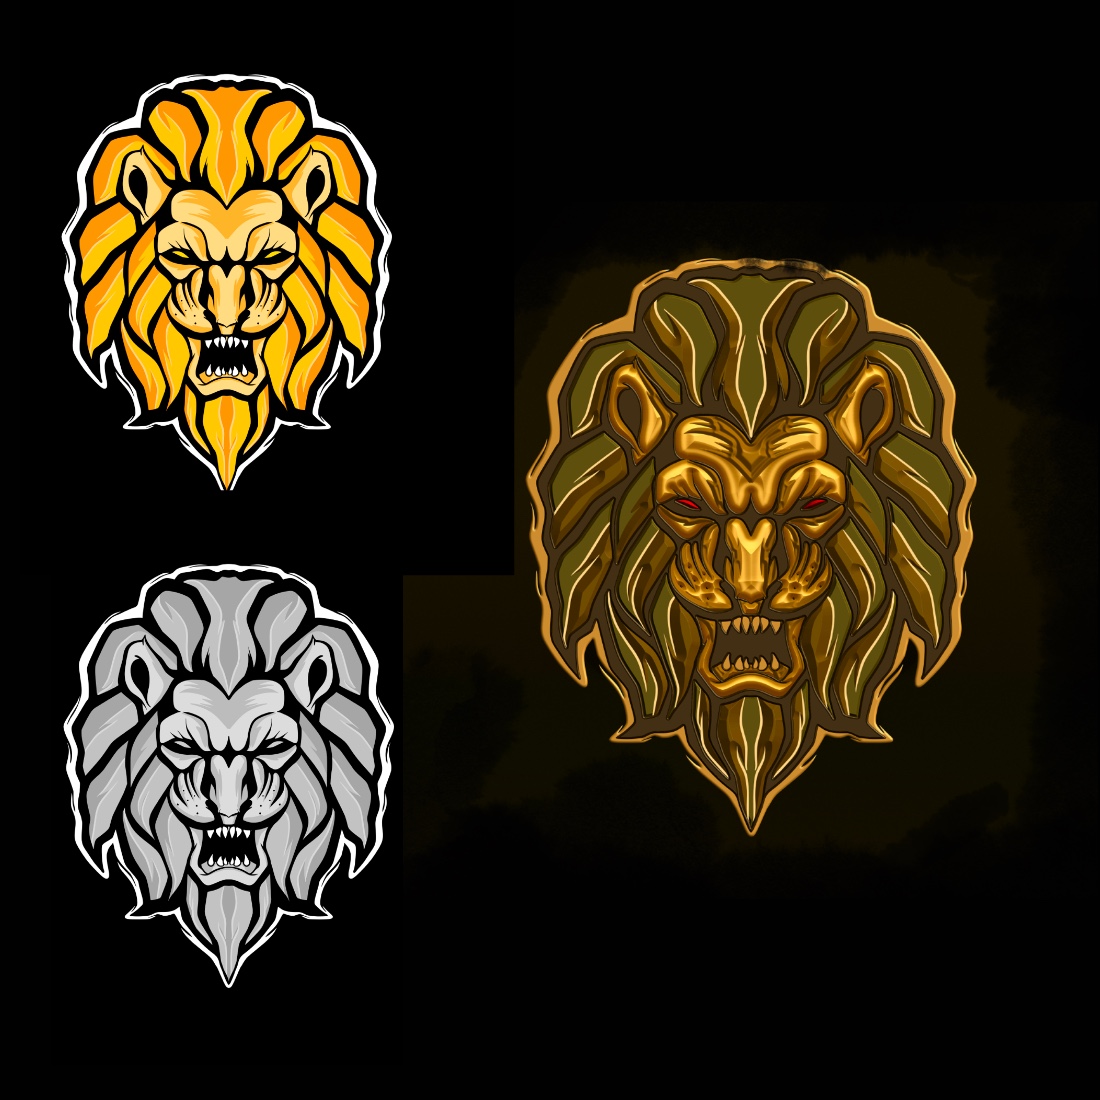 Mascot lion illustration hight resolution